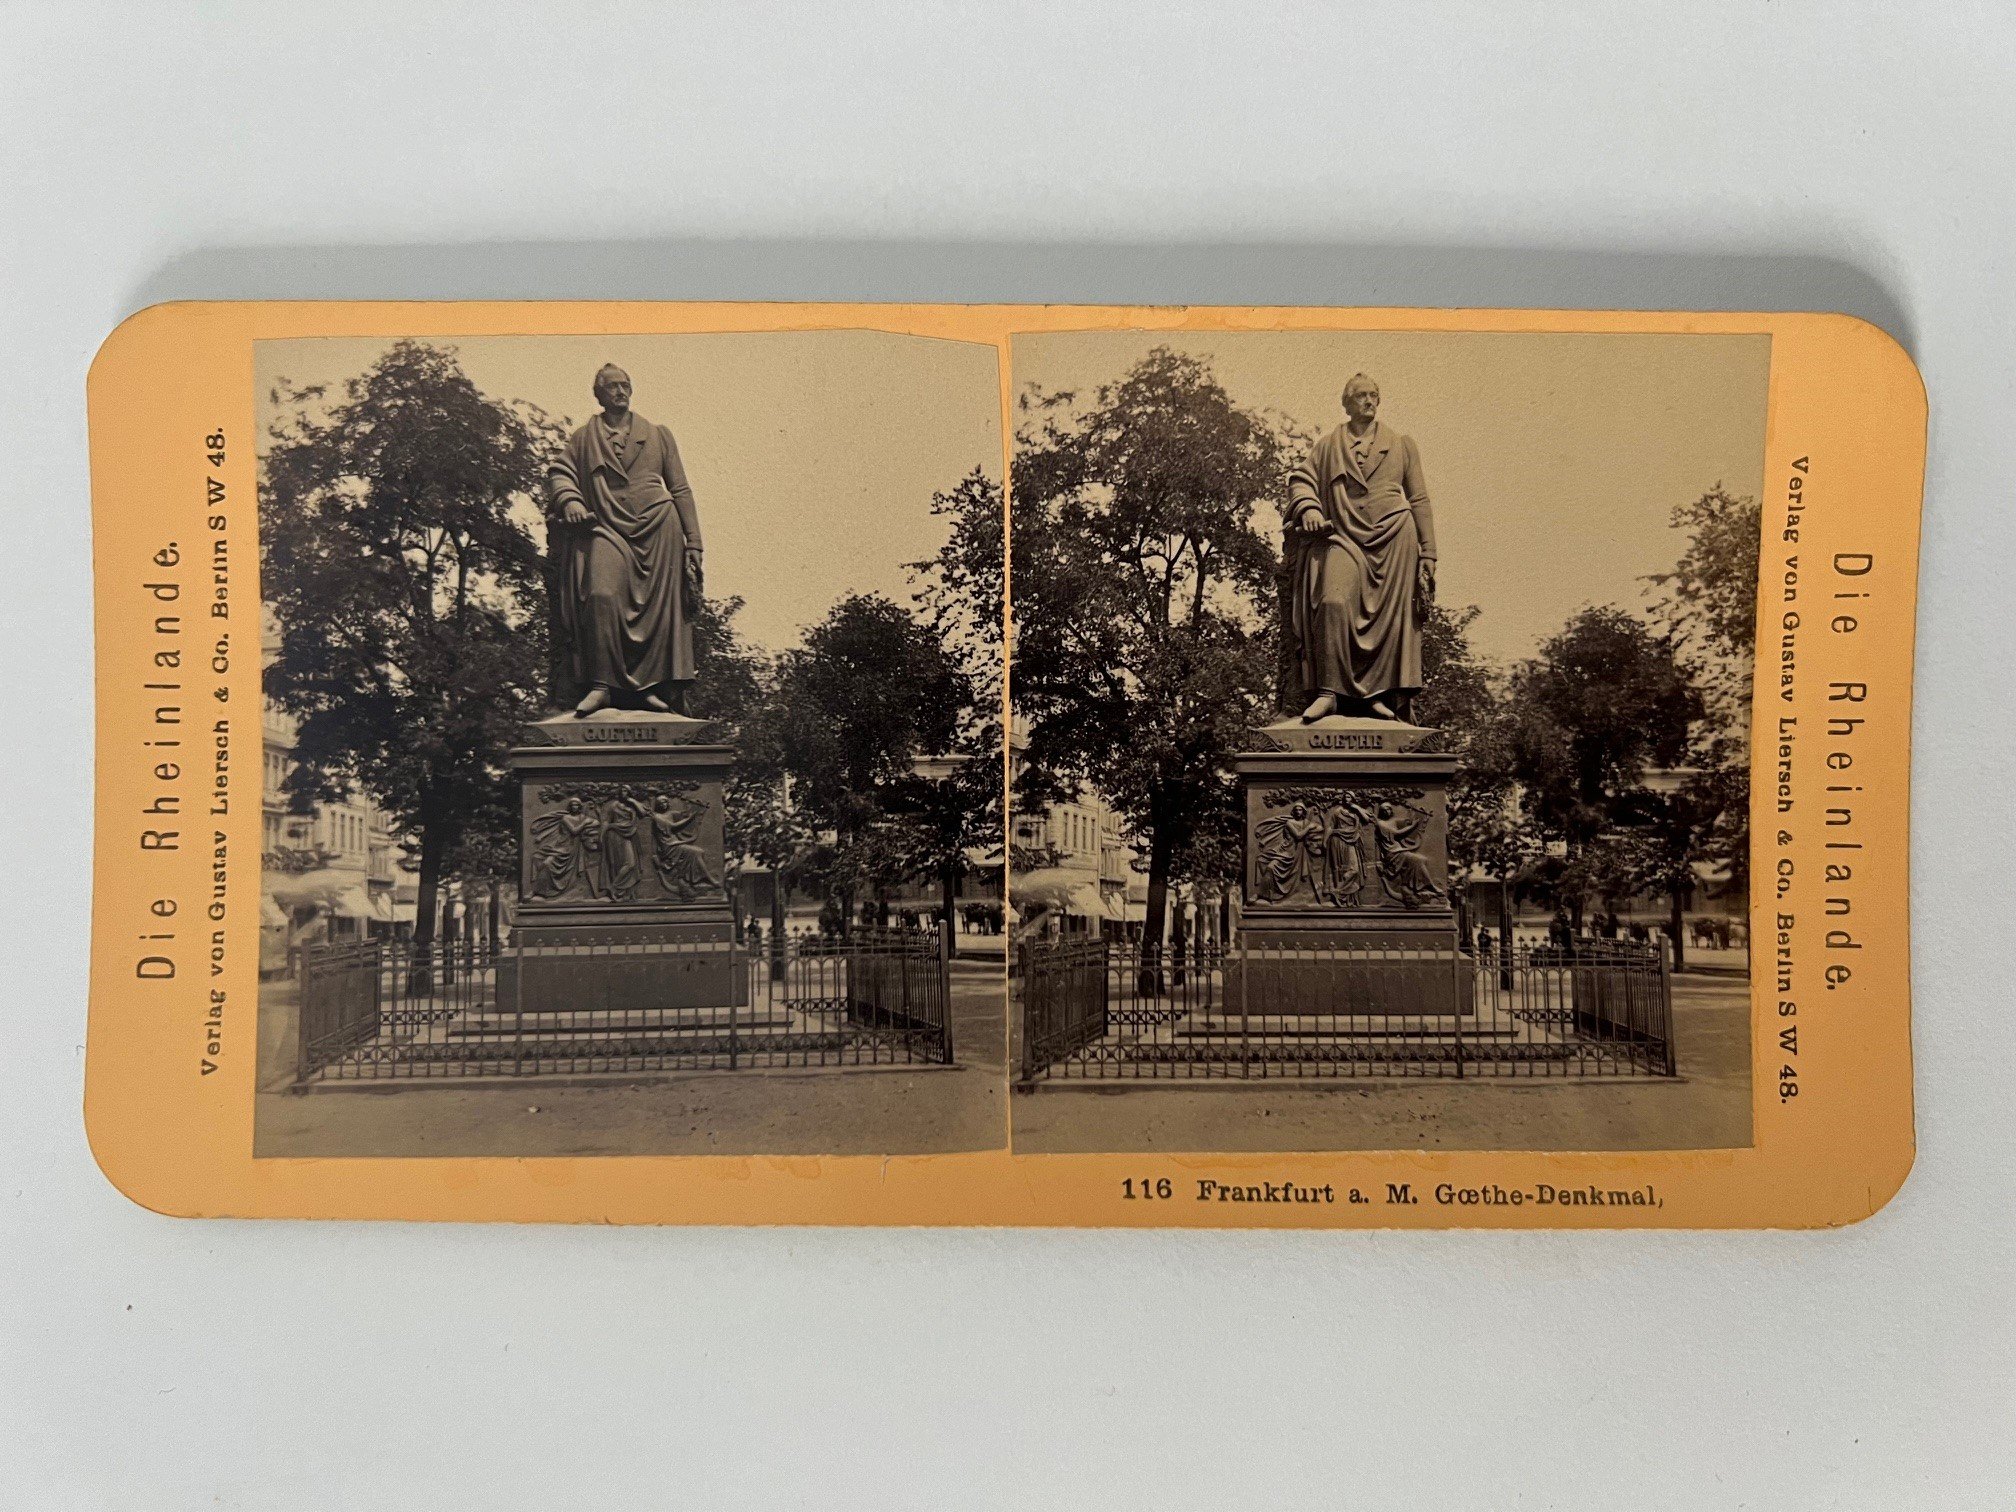 Stereobild, Remele, Frankfurt, Nr. 78, Goethedenkmal, ca. 1877. (Taunus-Rhein-Main - Regionalgeschichtliche Sammlung Dr. Stefan Naas CC BY-NC-SA)